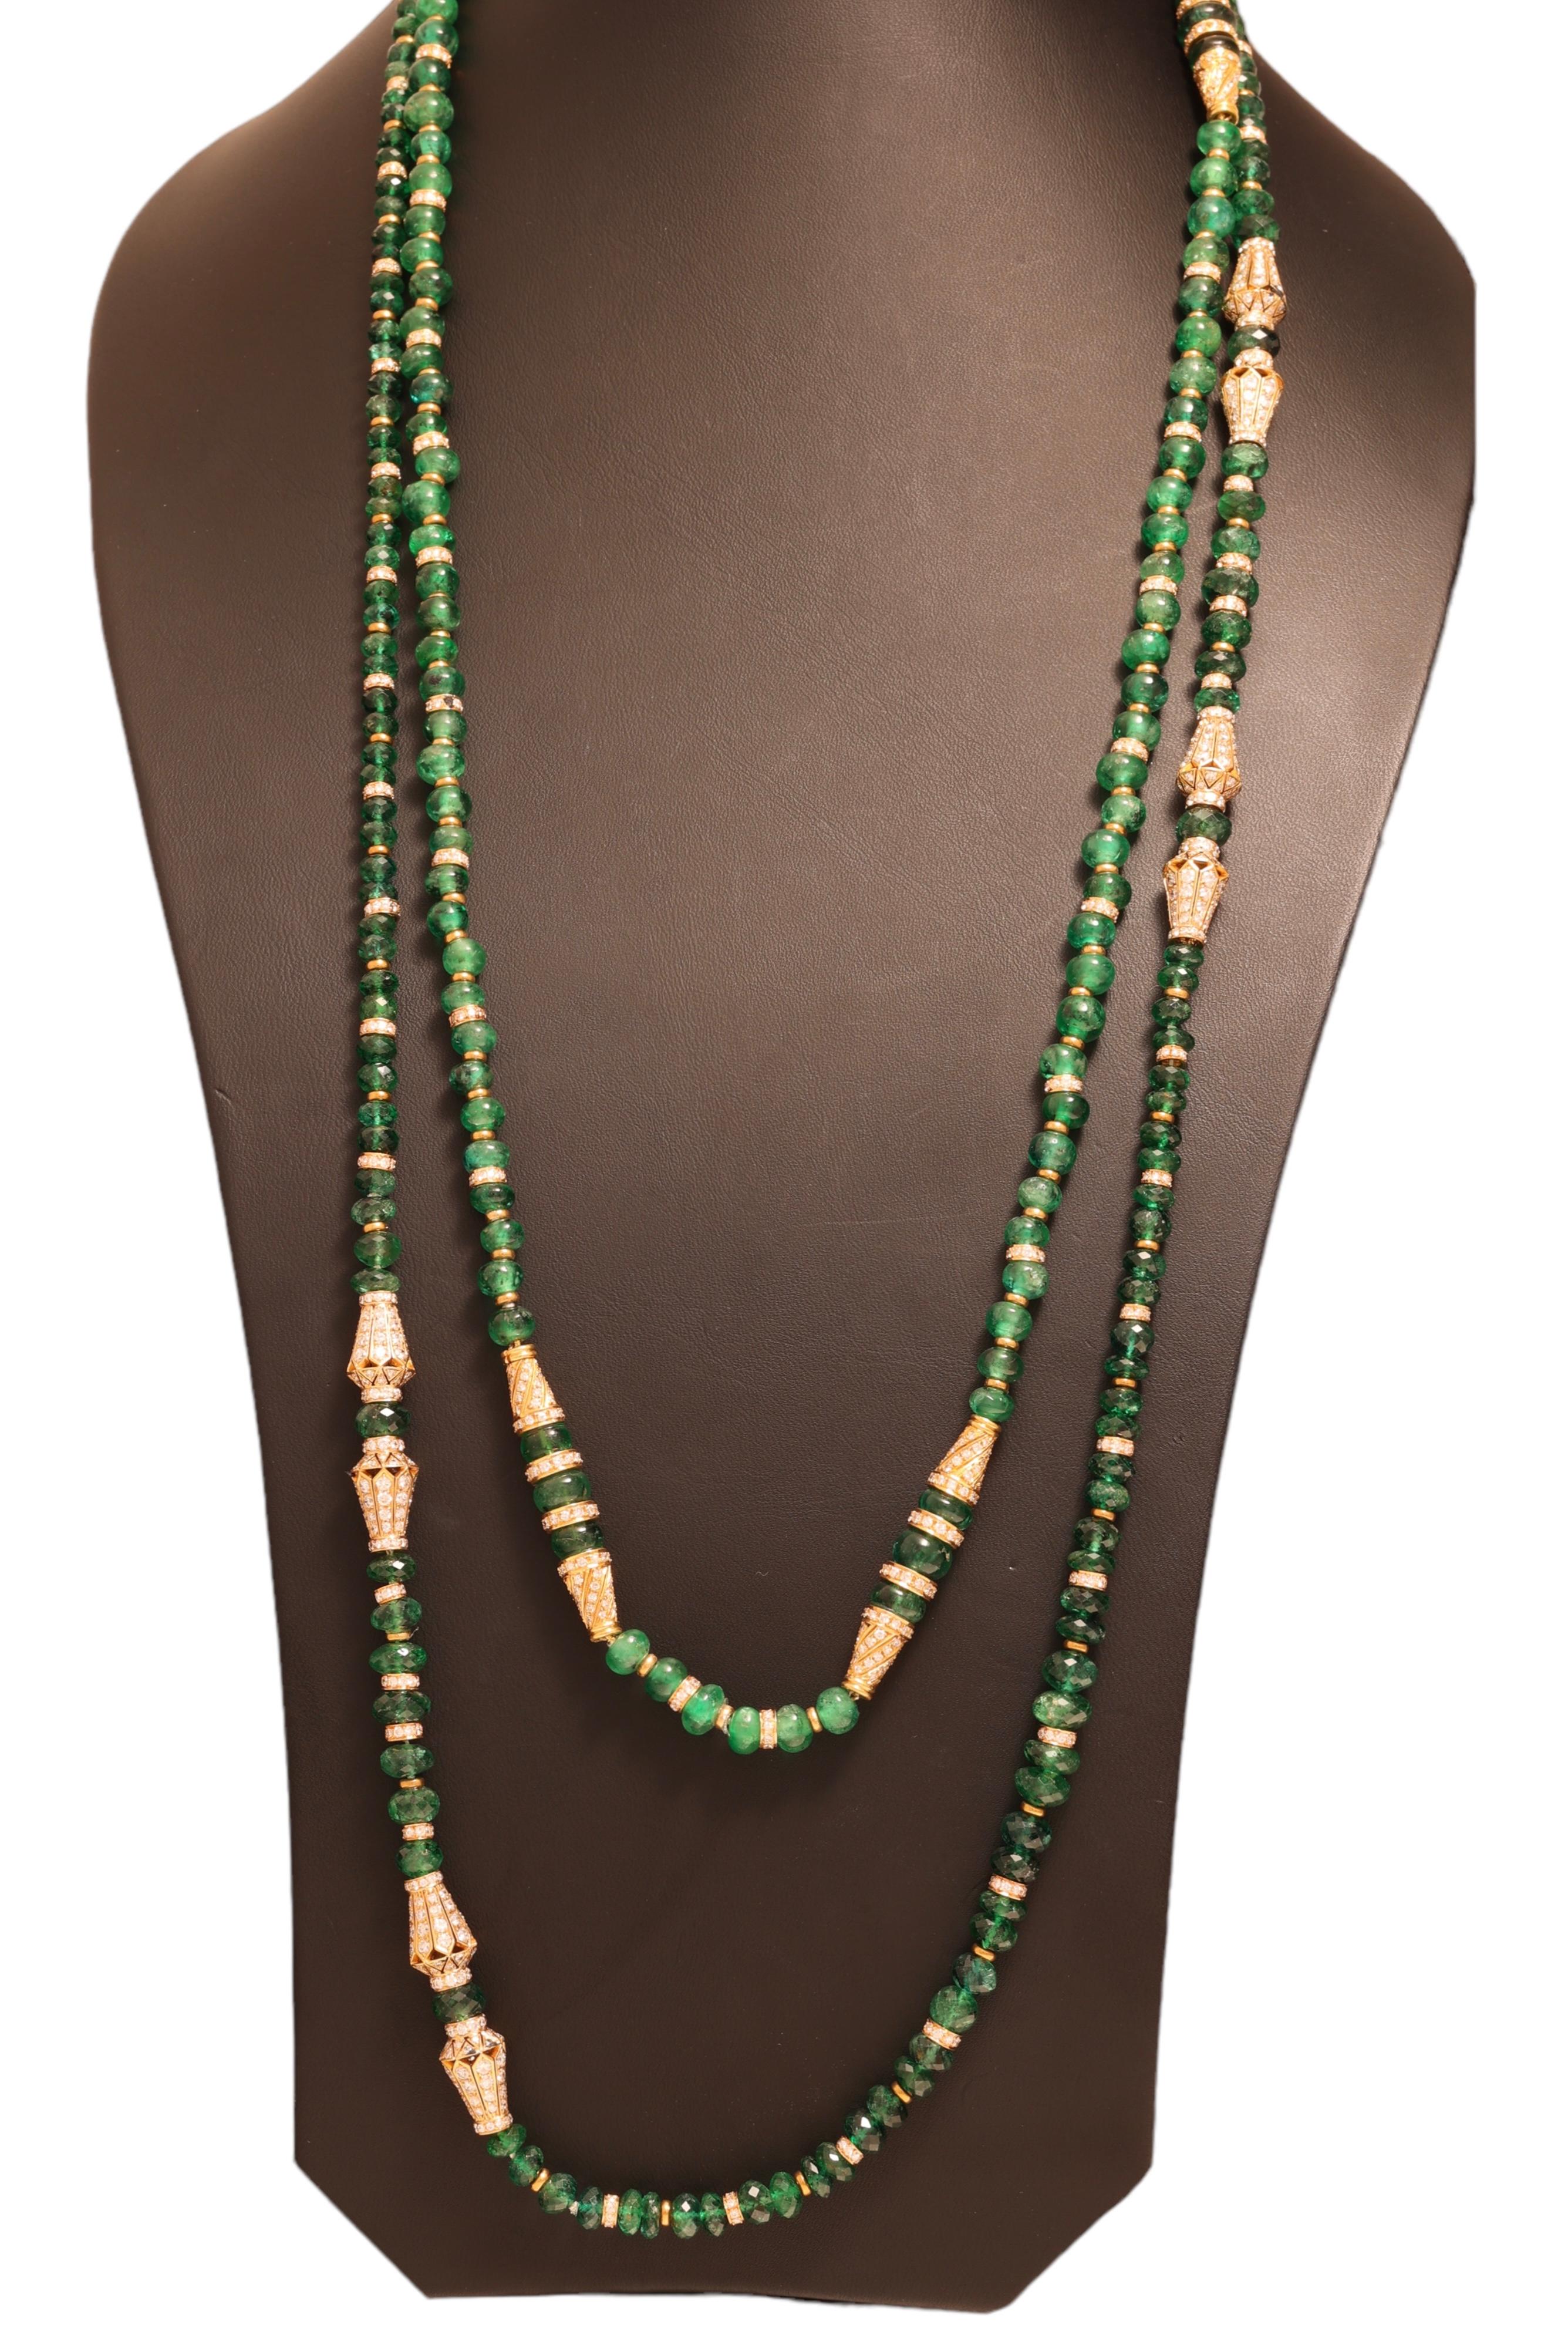 Adler Genèva 18kt Gold Necklaces 480ct Faceted Bead Emeralds CGL Certified For Sale 3